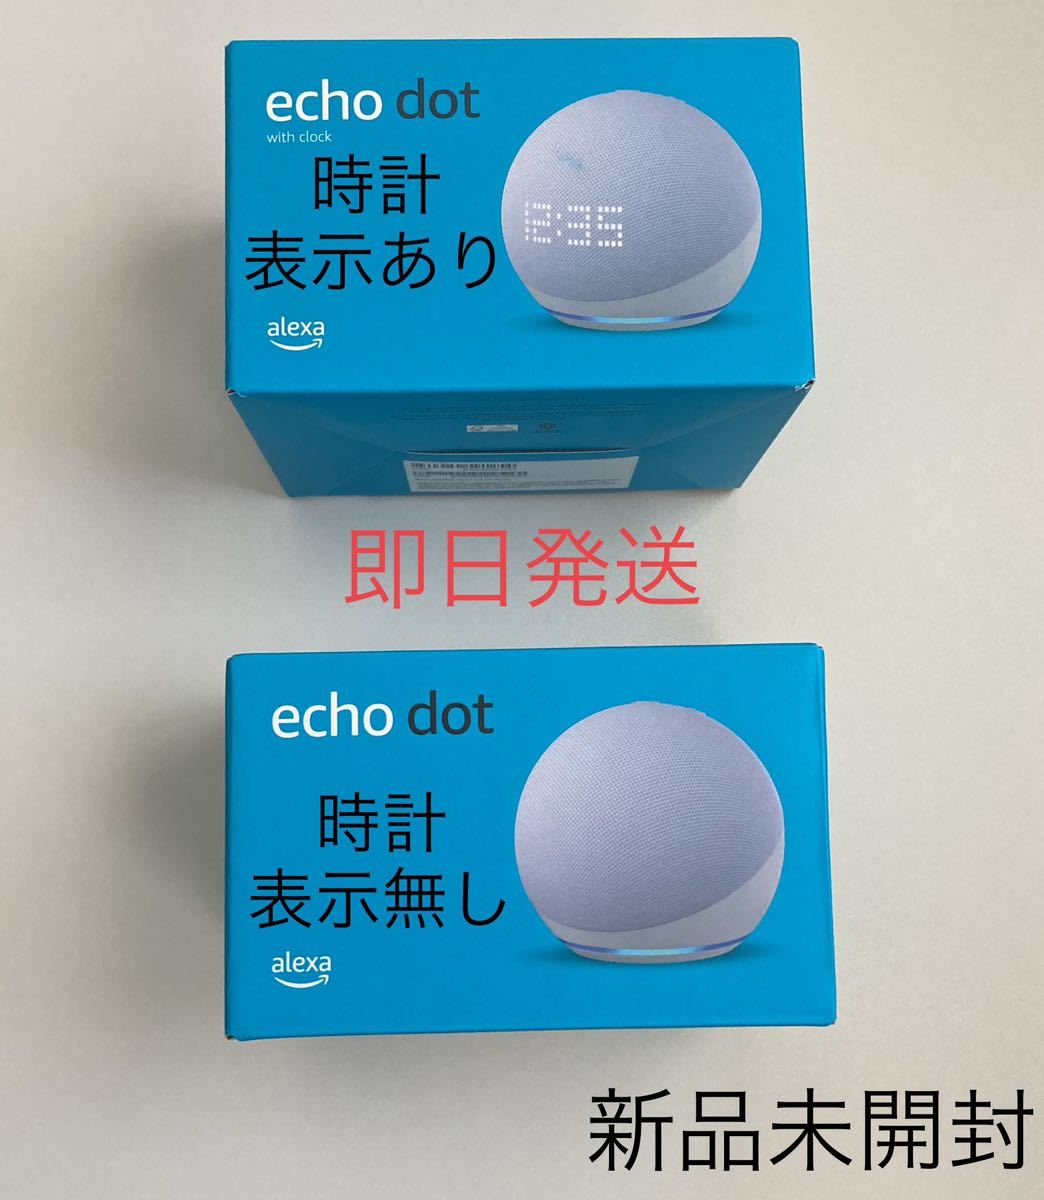 Echo Dot with clock & Echo Dot 第5世代 2台セット エコードット